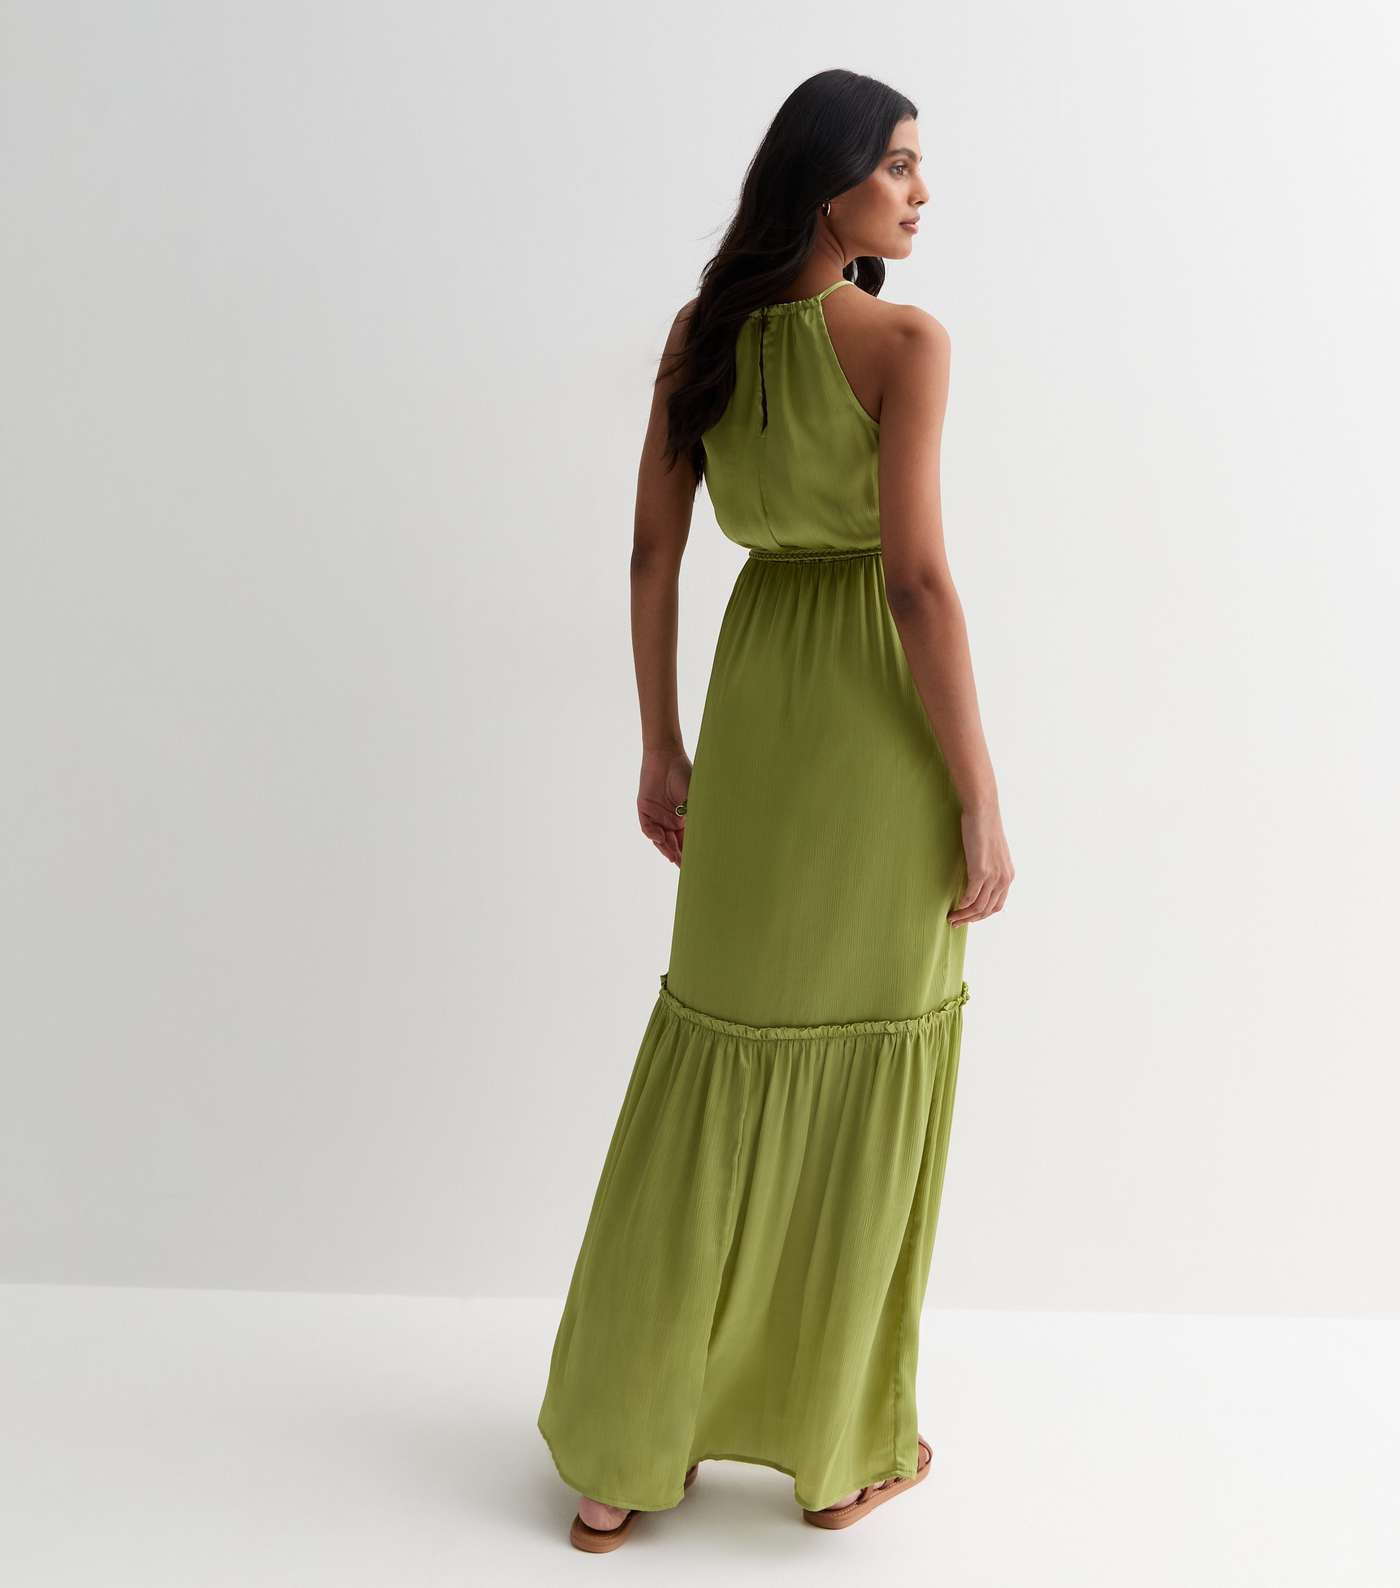 Gini London Green Halter Maxi Dress Image 4